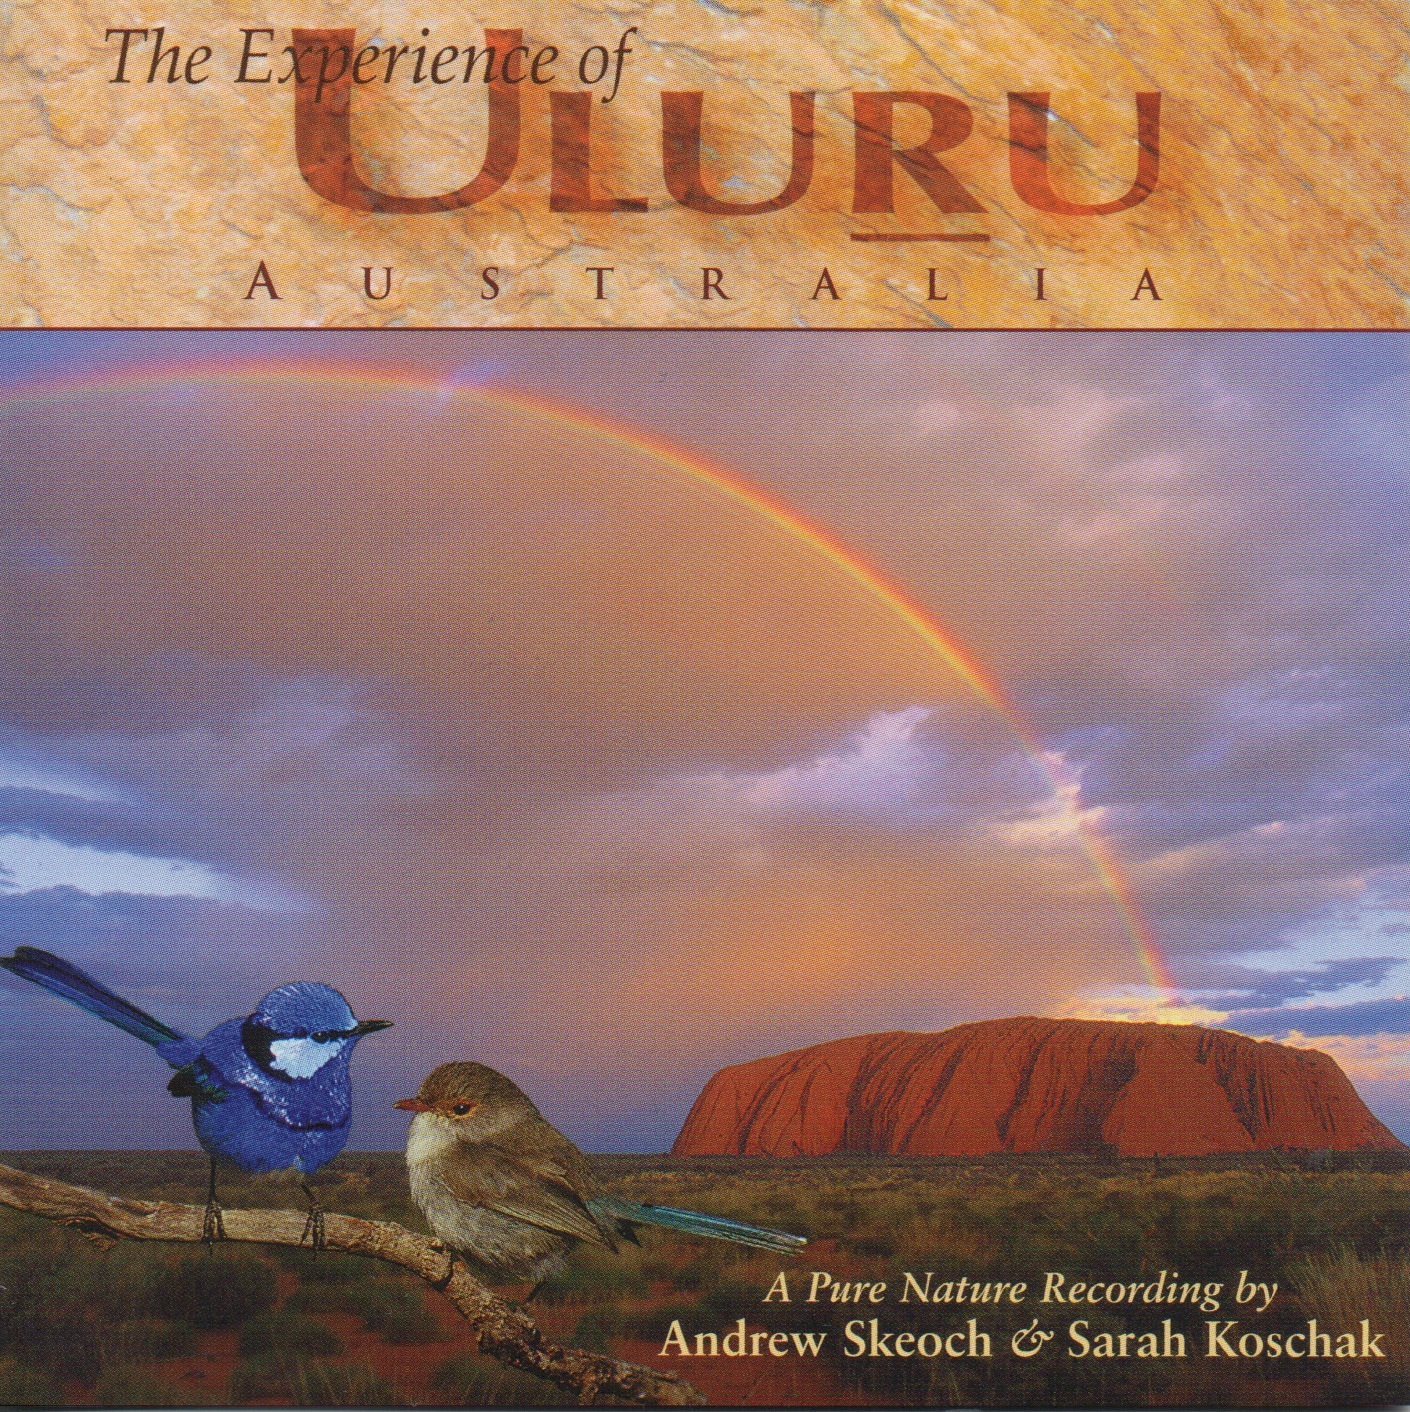 Experience of Uluru - a nature recording